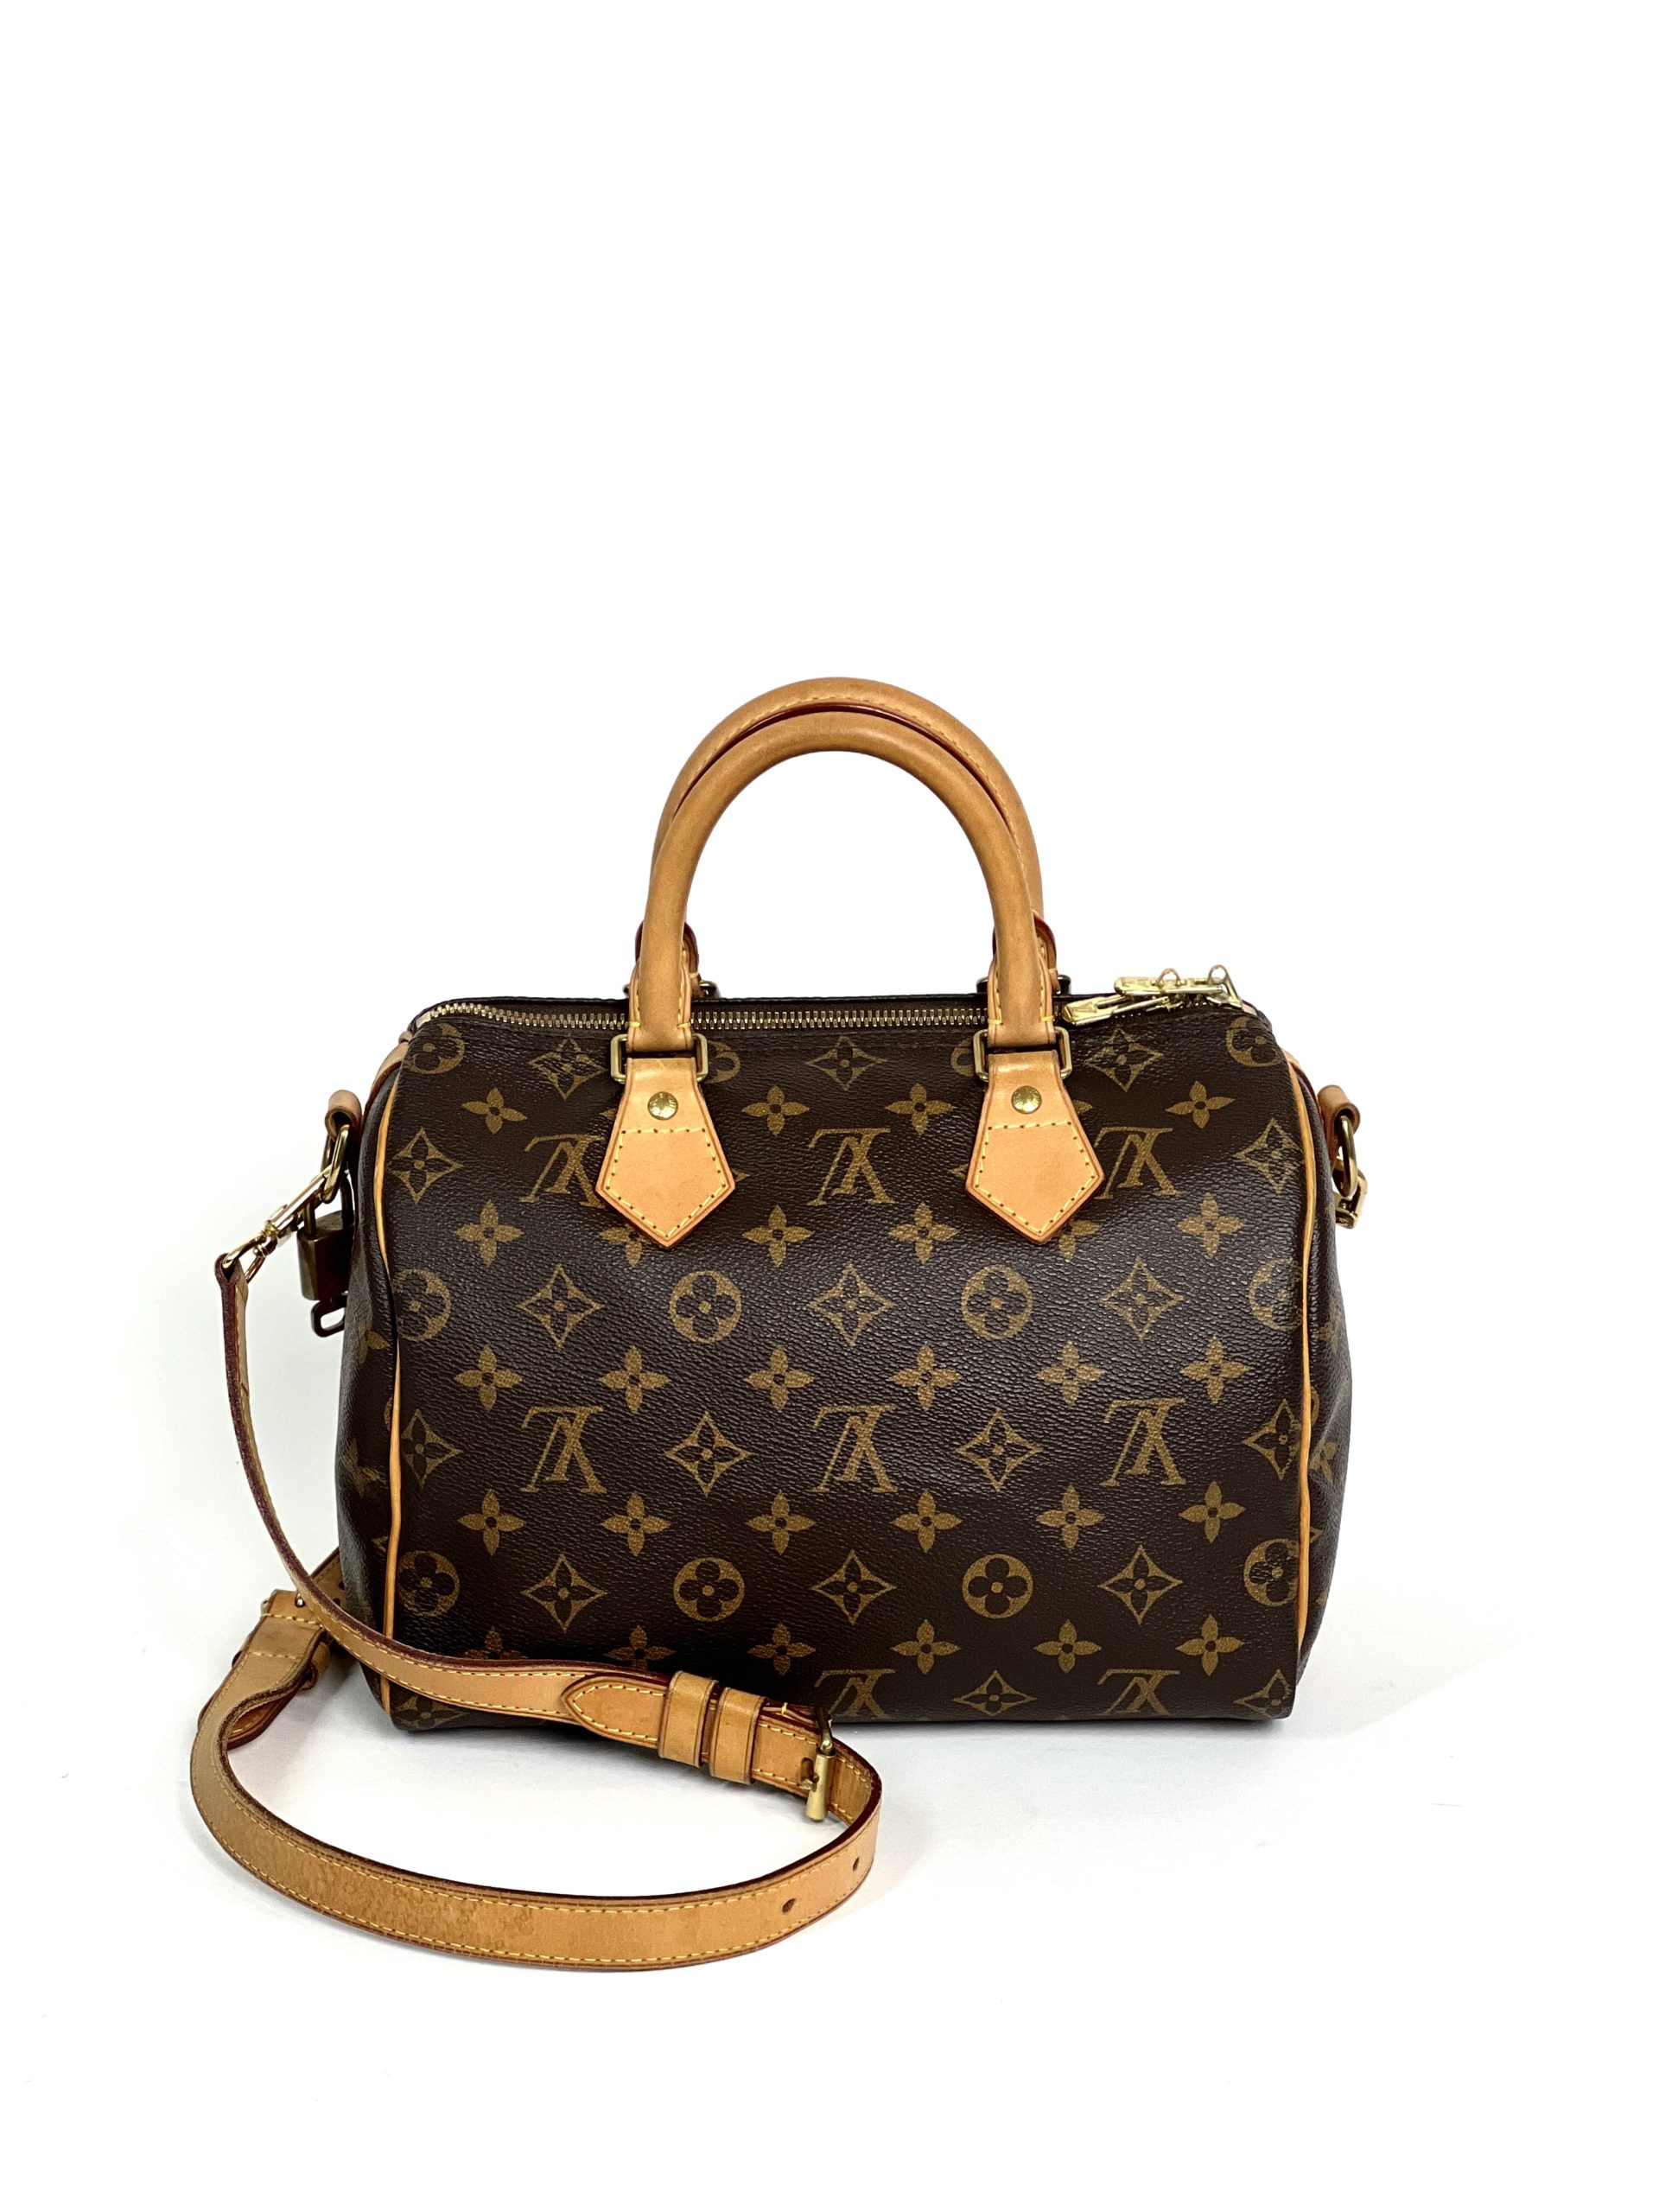 Louis Vuitton Speedy Bandouliere 25 Bag Review 